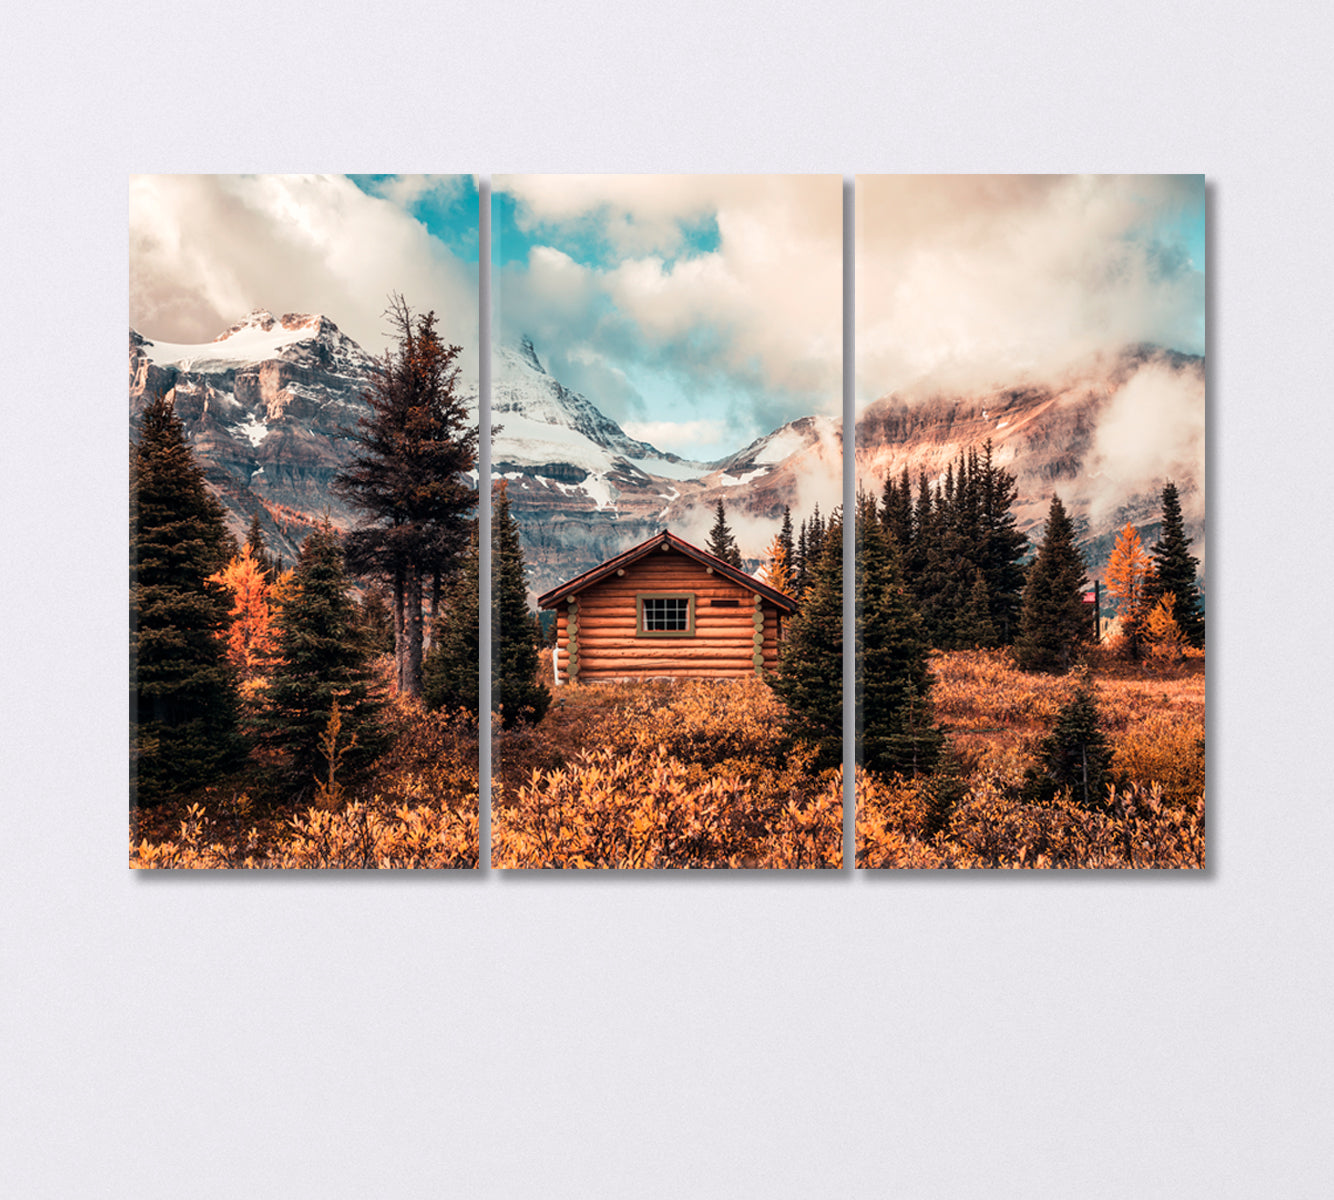 Wooden Hut with Mount Assiniboine in Autumn Canada Canvas Print-Canvas Print-CetArt-3 Panels-36x24 inches-CetArt